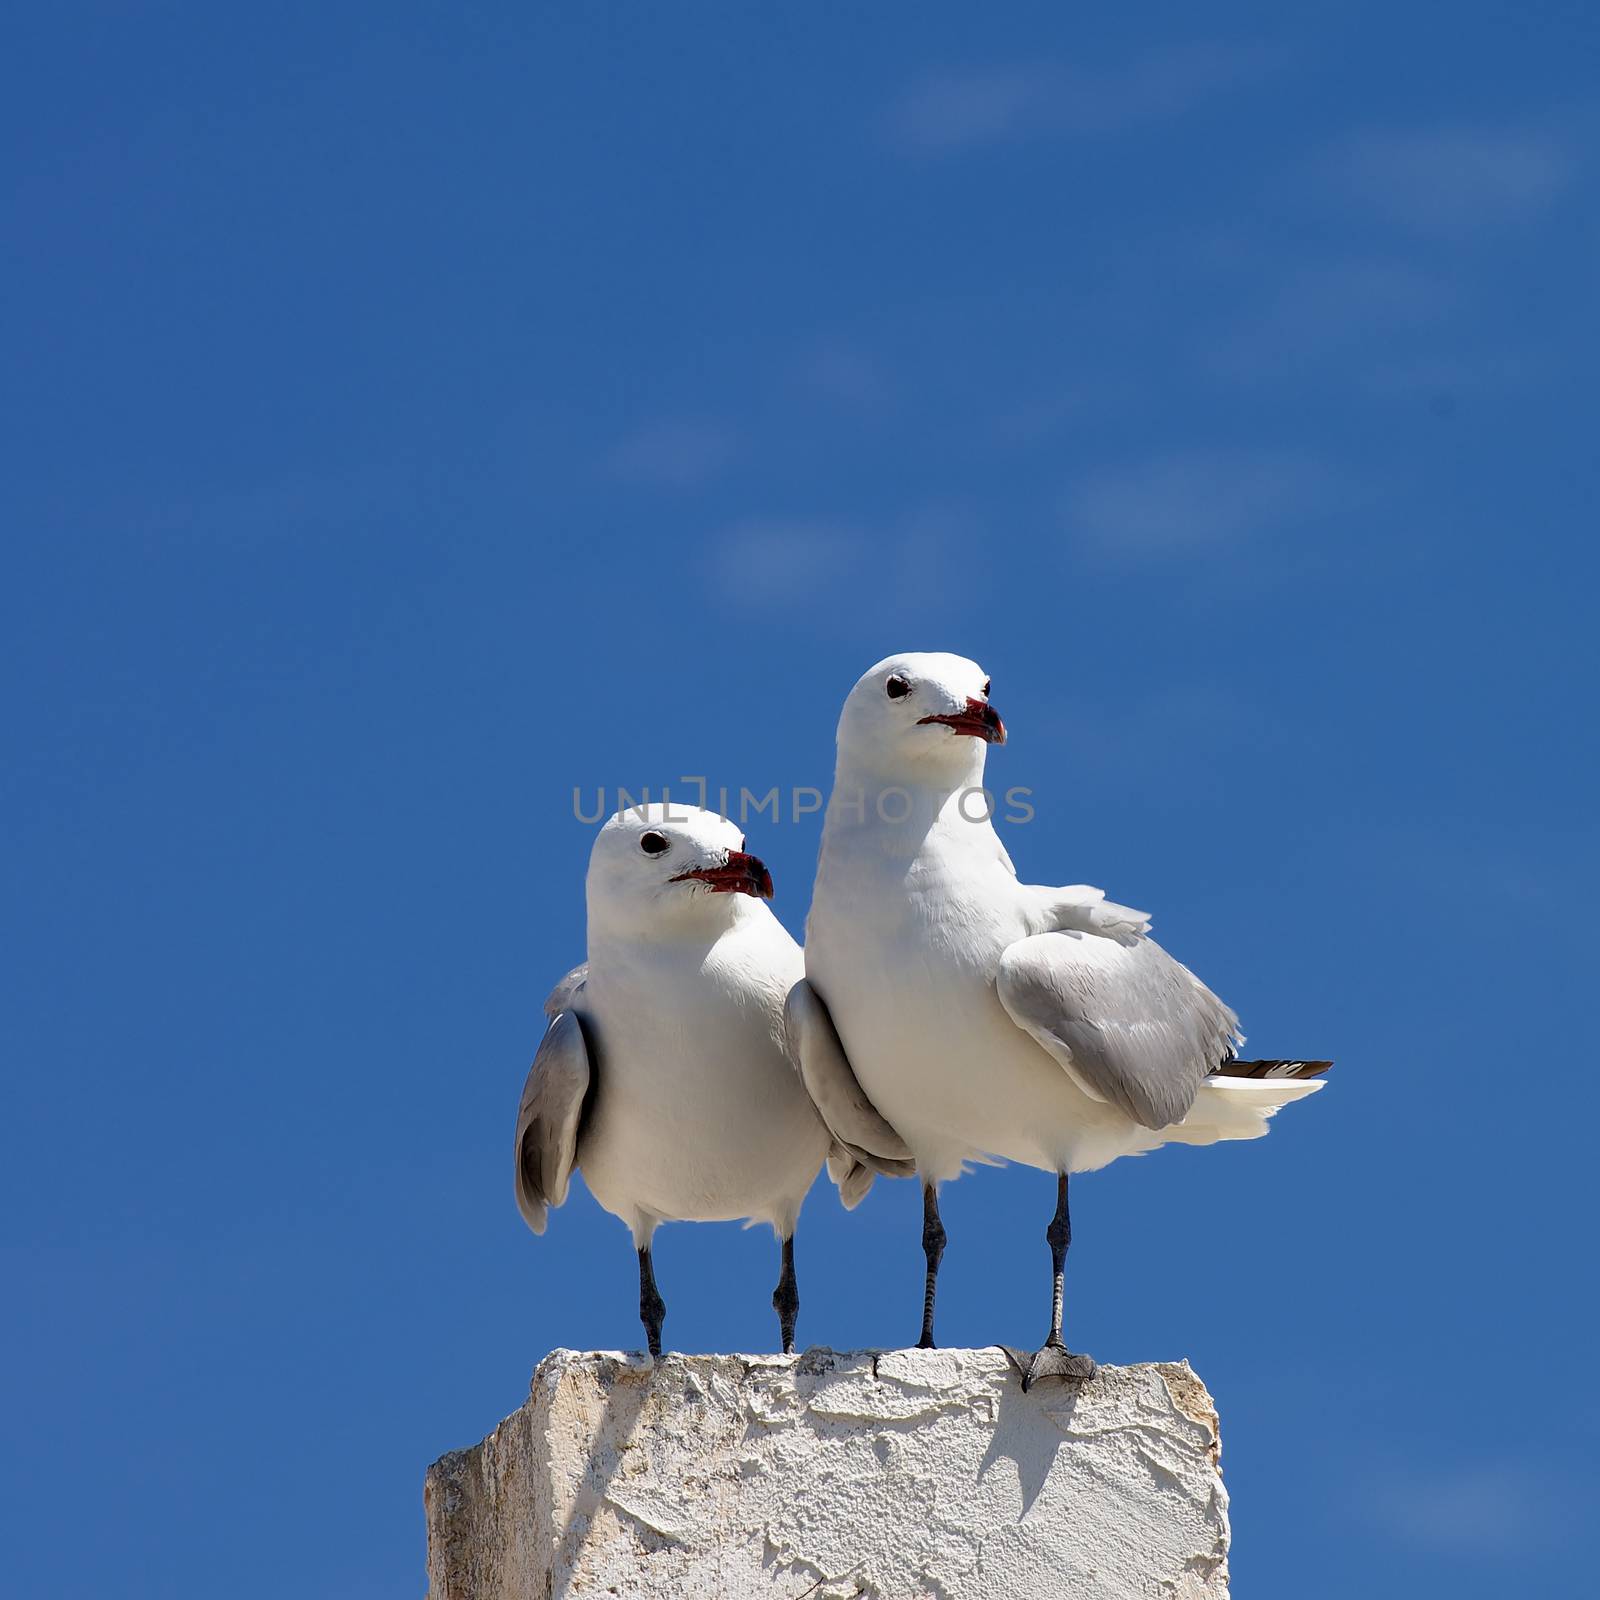 Two Seagulls by zhekos